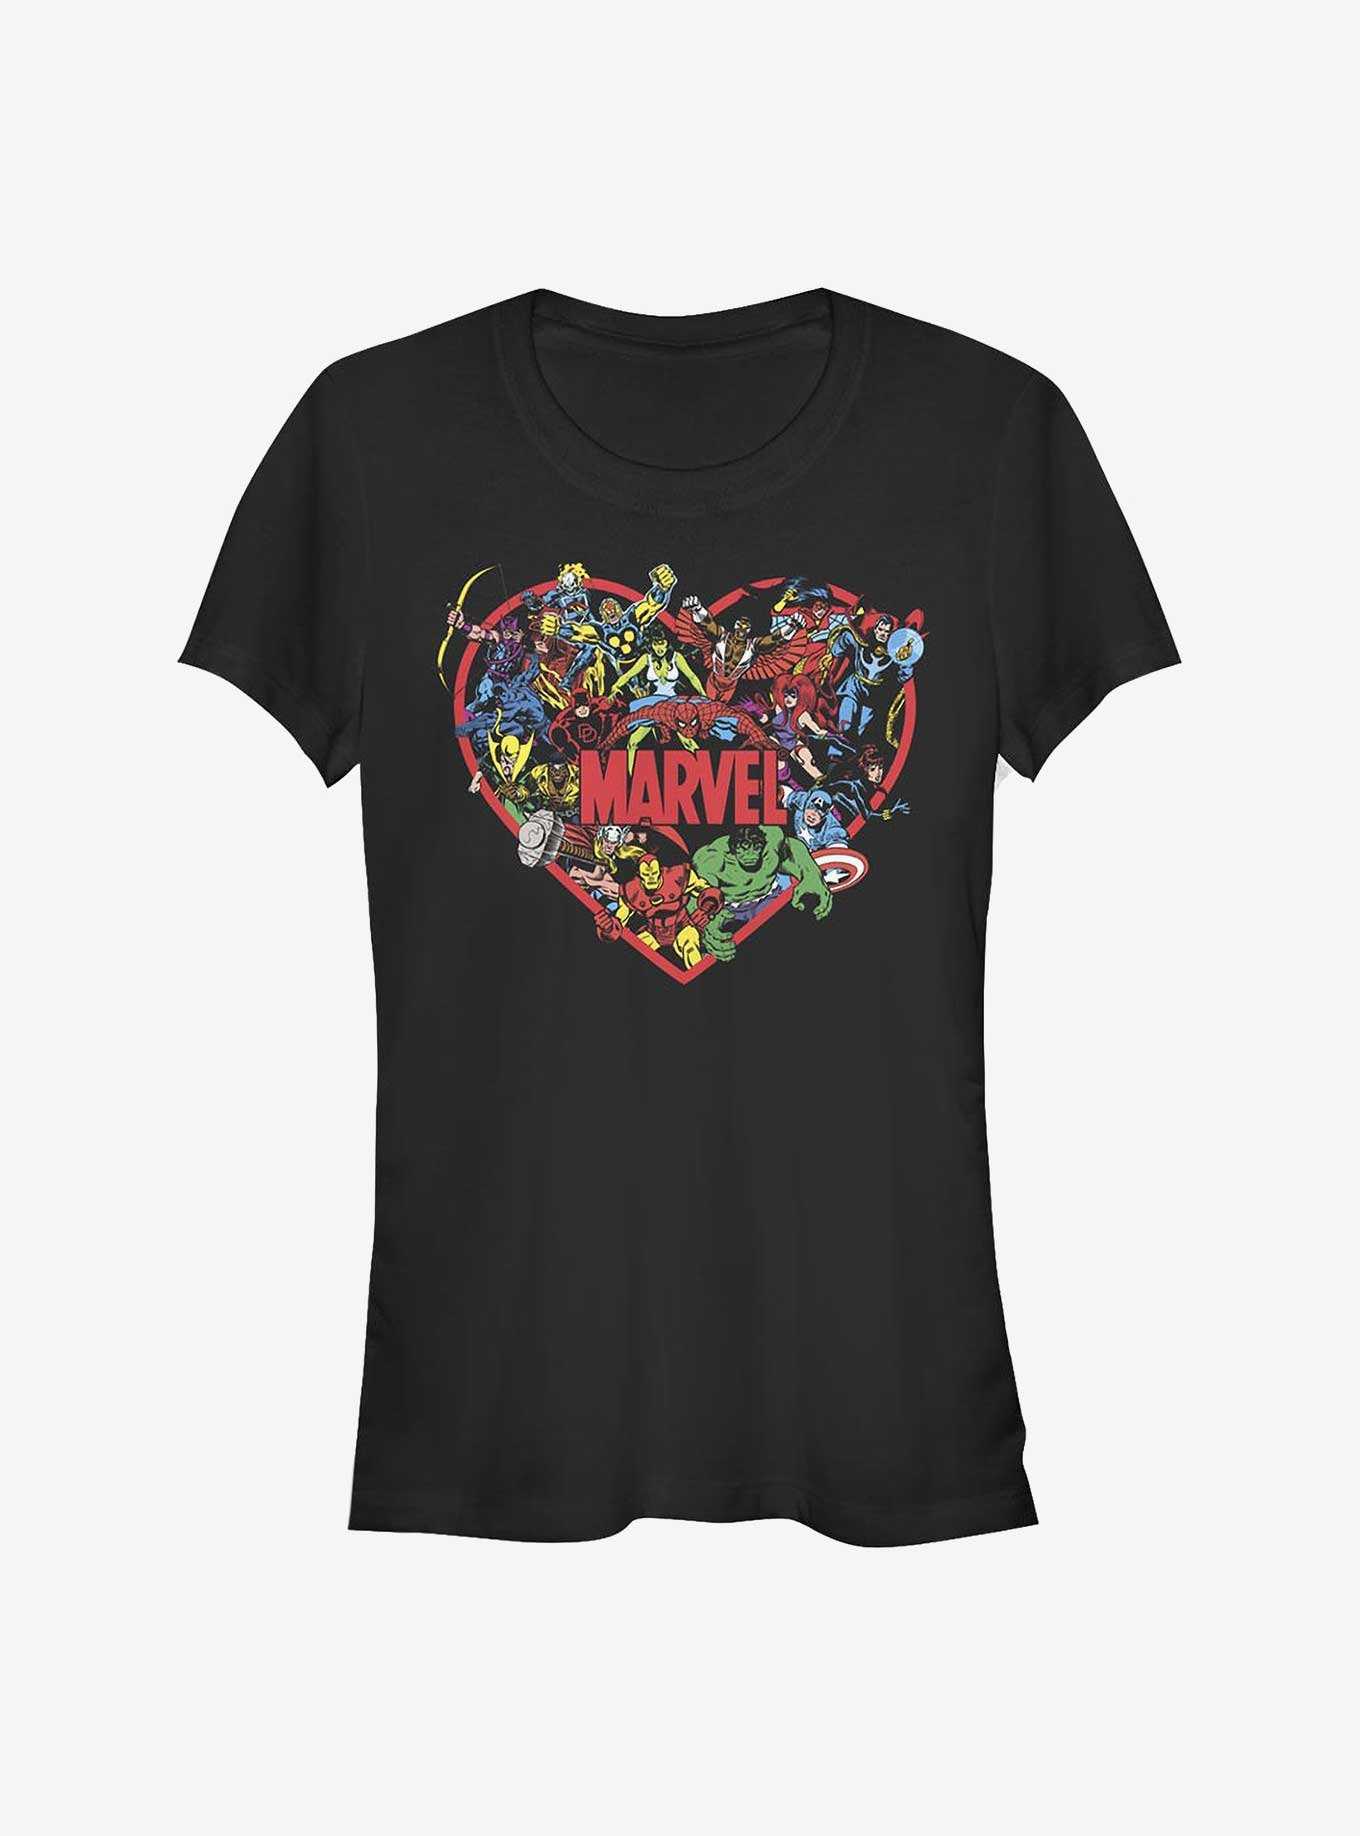 Marvel | & Comics Tees Hot Topic OFFICIAL Marvel T-Shirts